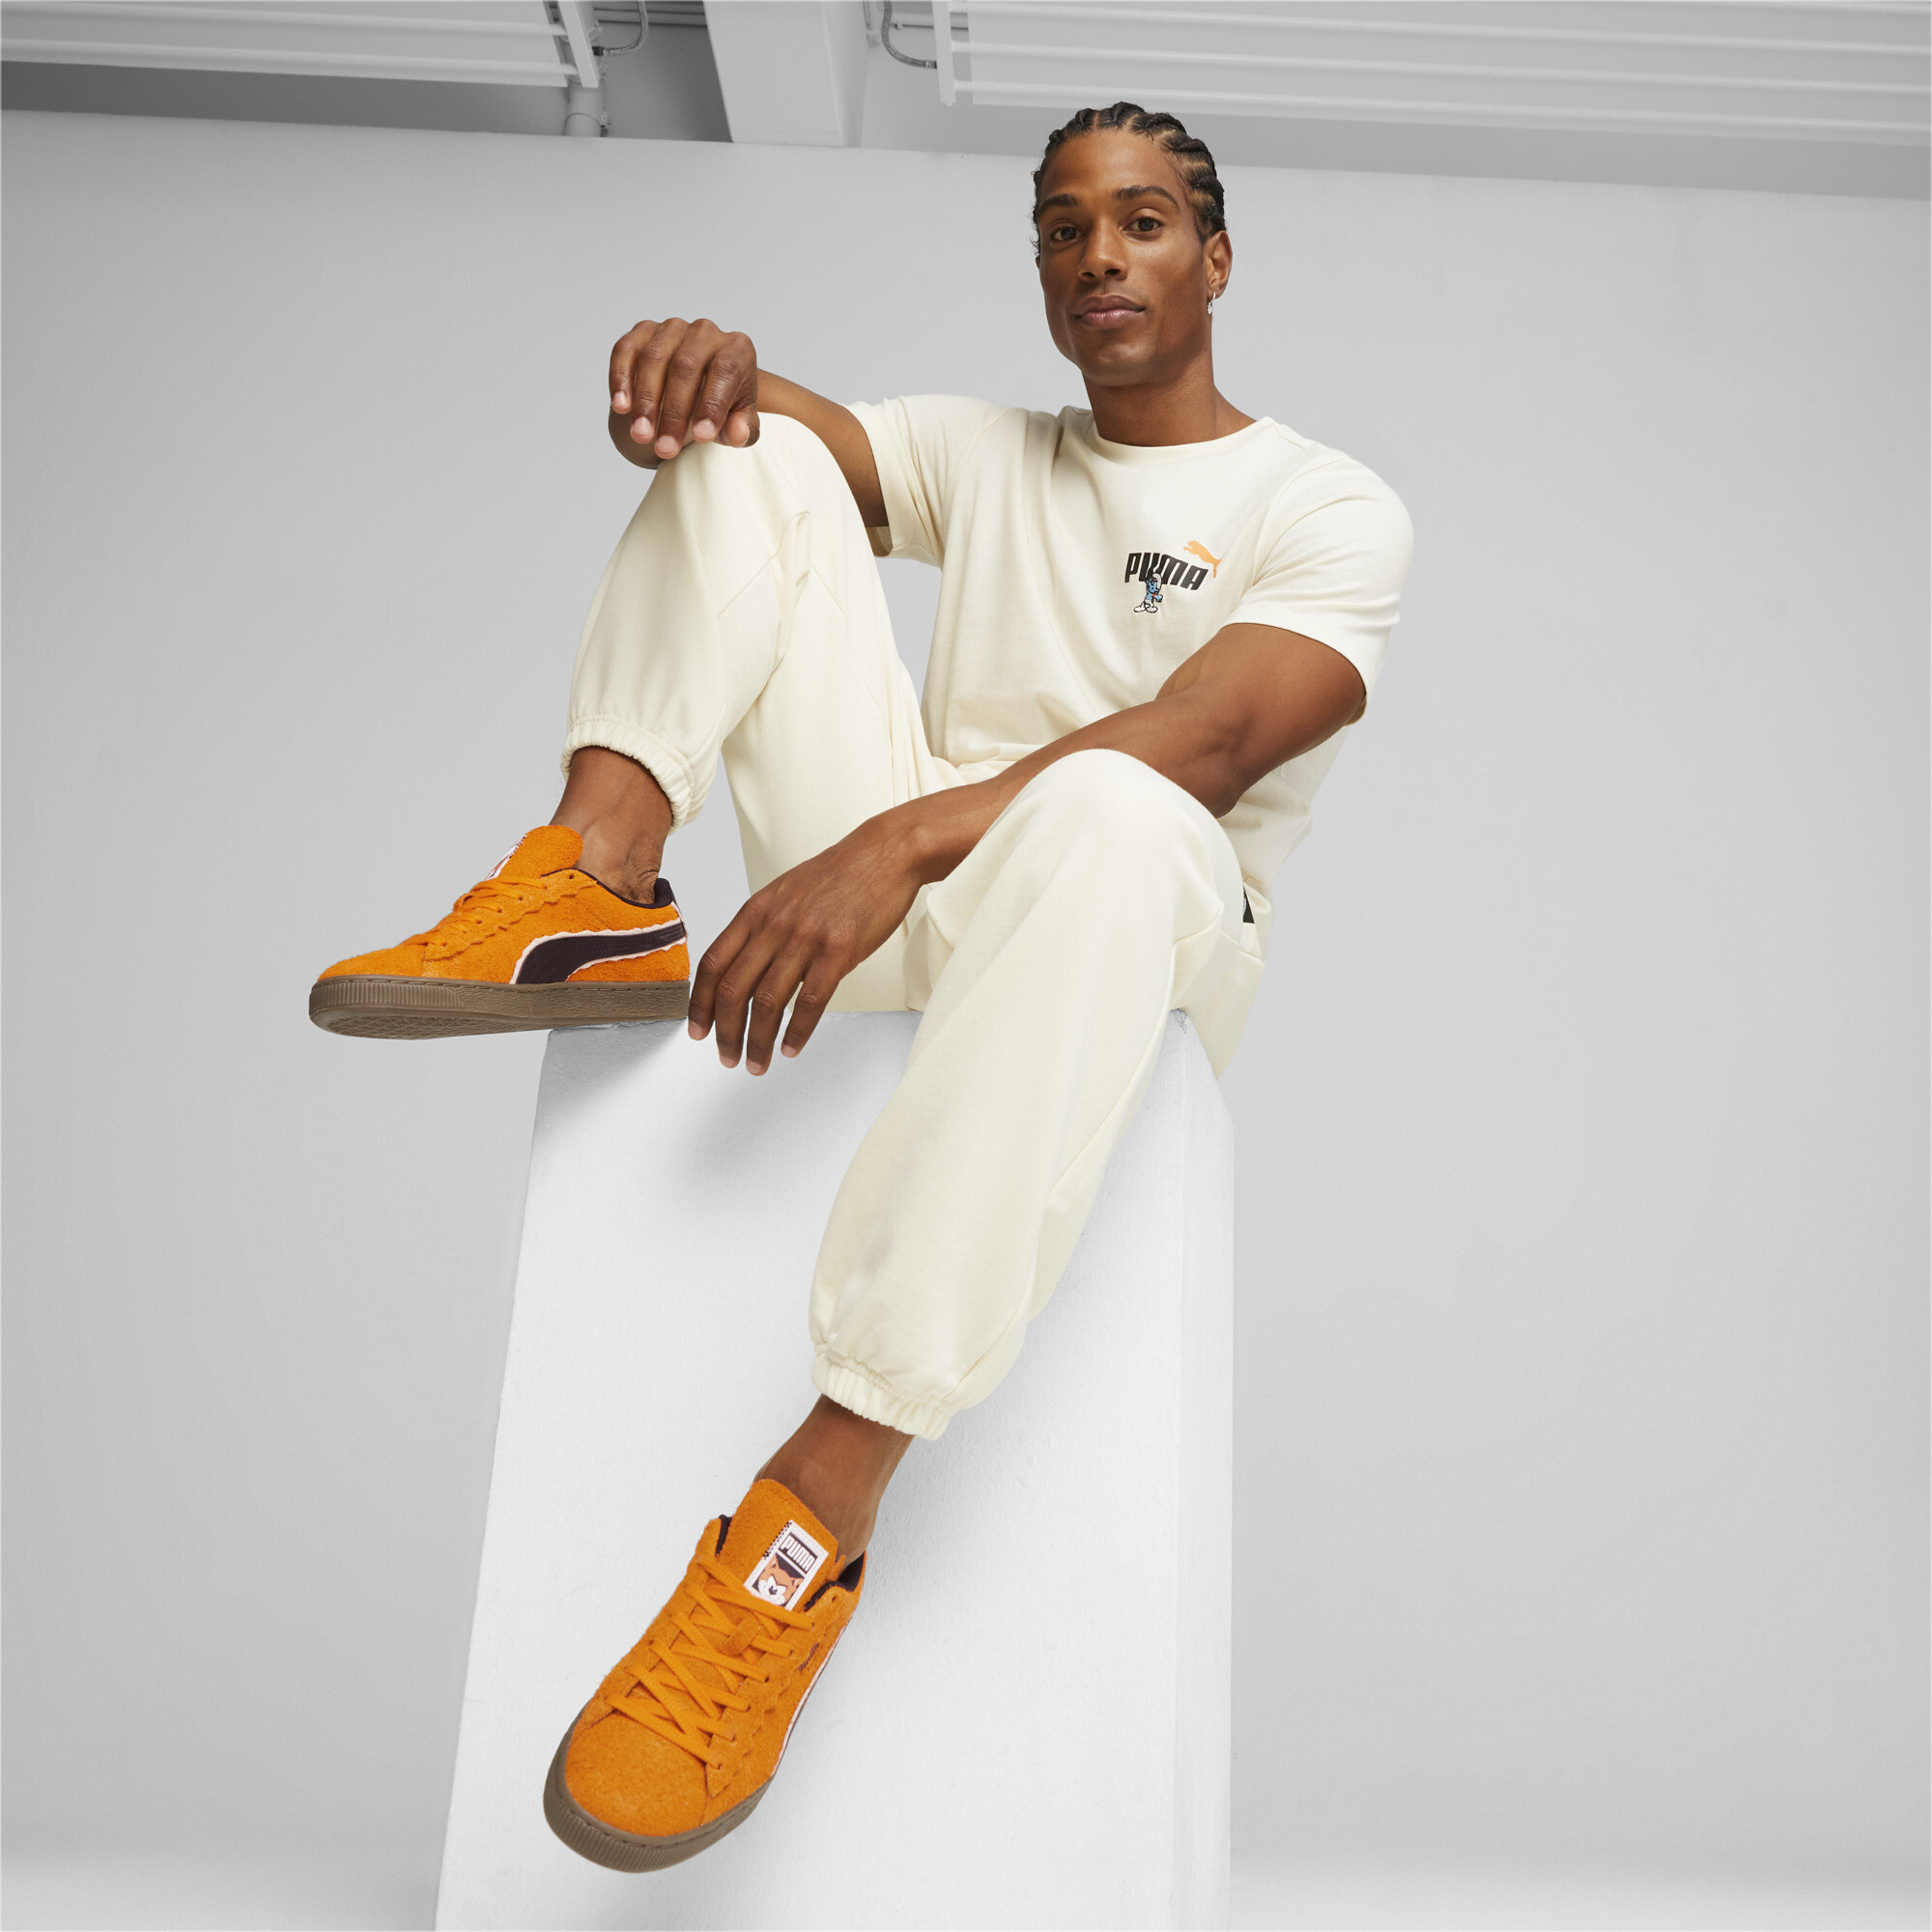 Men's PUMA X THE SMURFS Suede Sneakers In Orange, Size EU 43